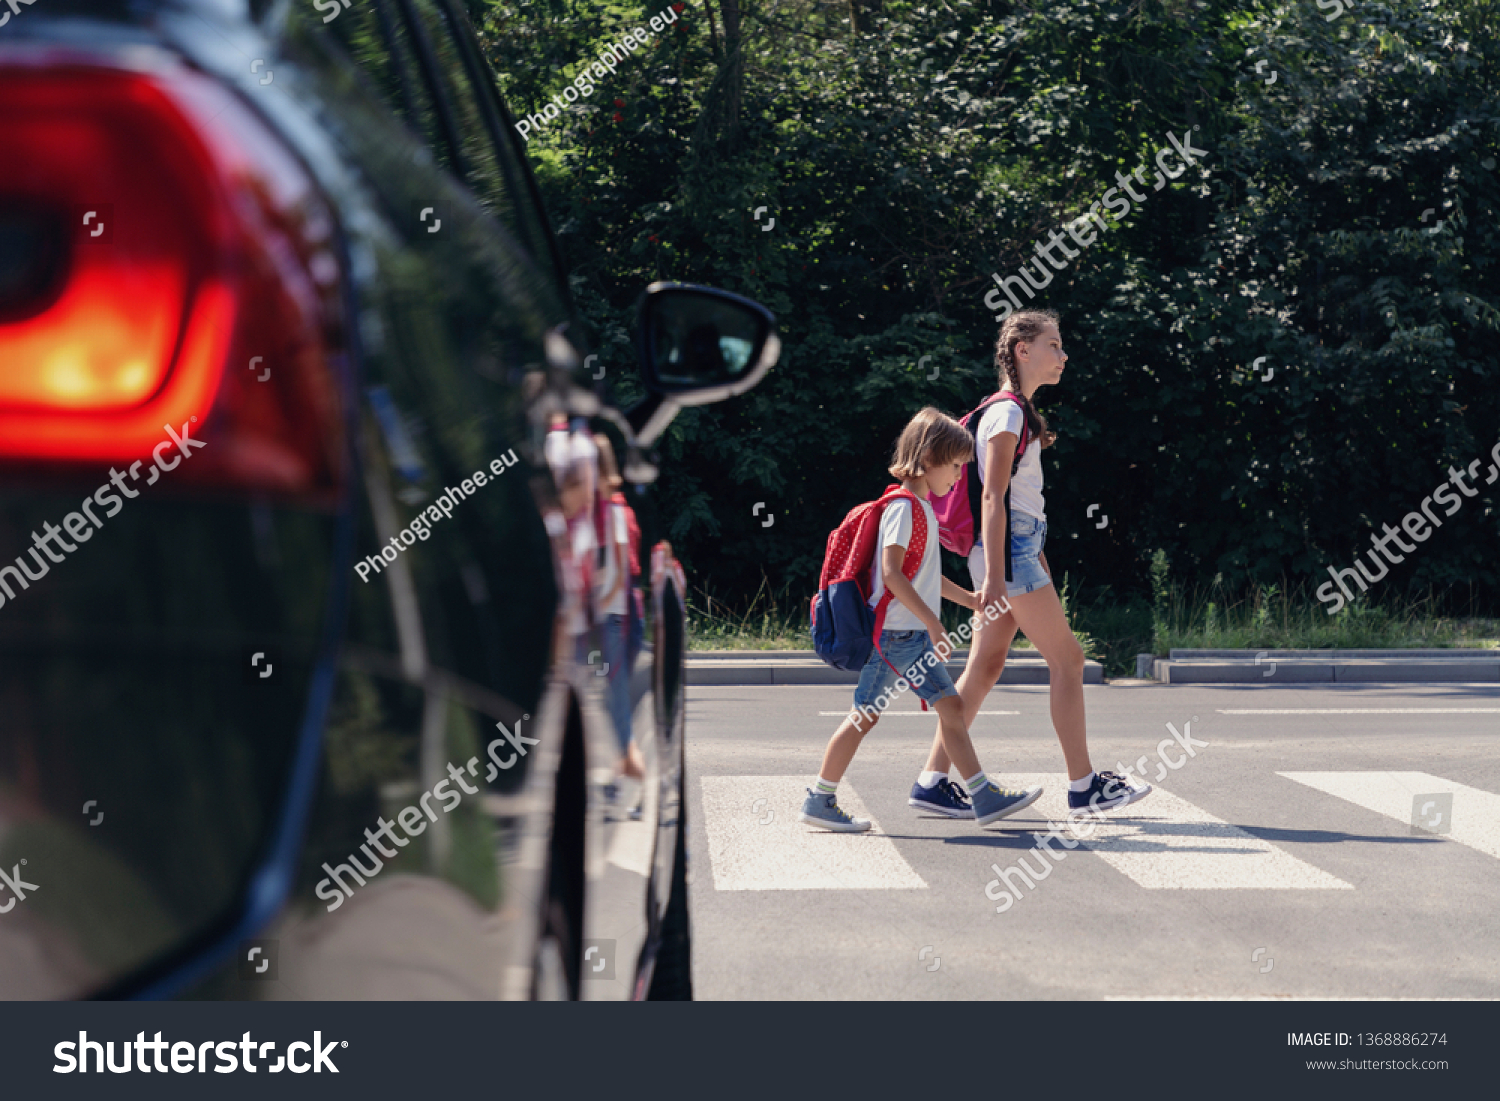 Children next to a car walking through pedestrian crossing to the school #1368886274